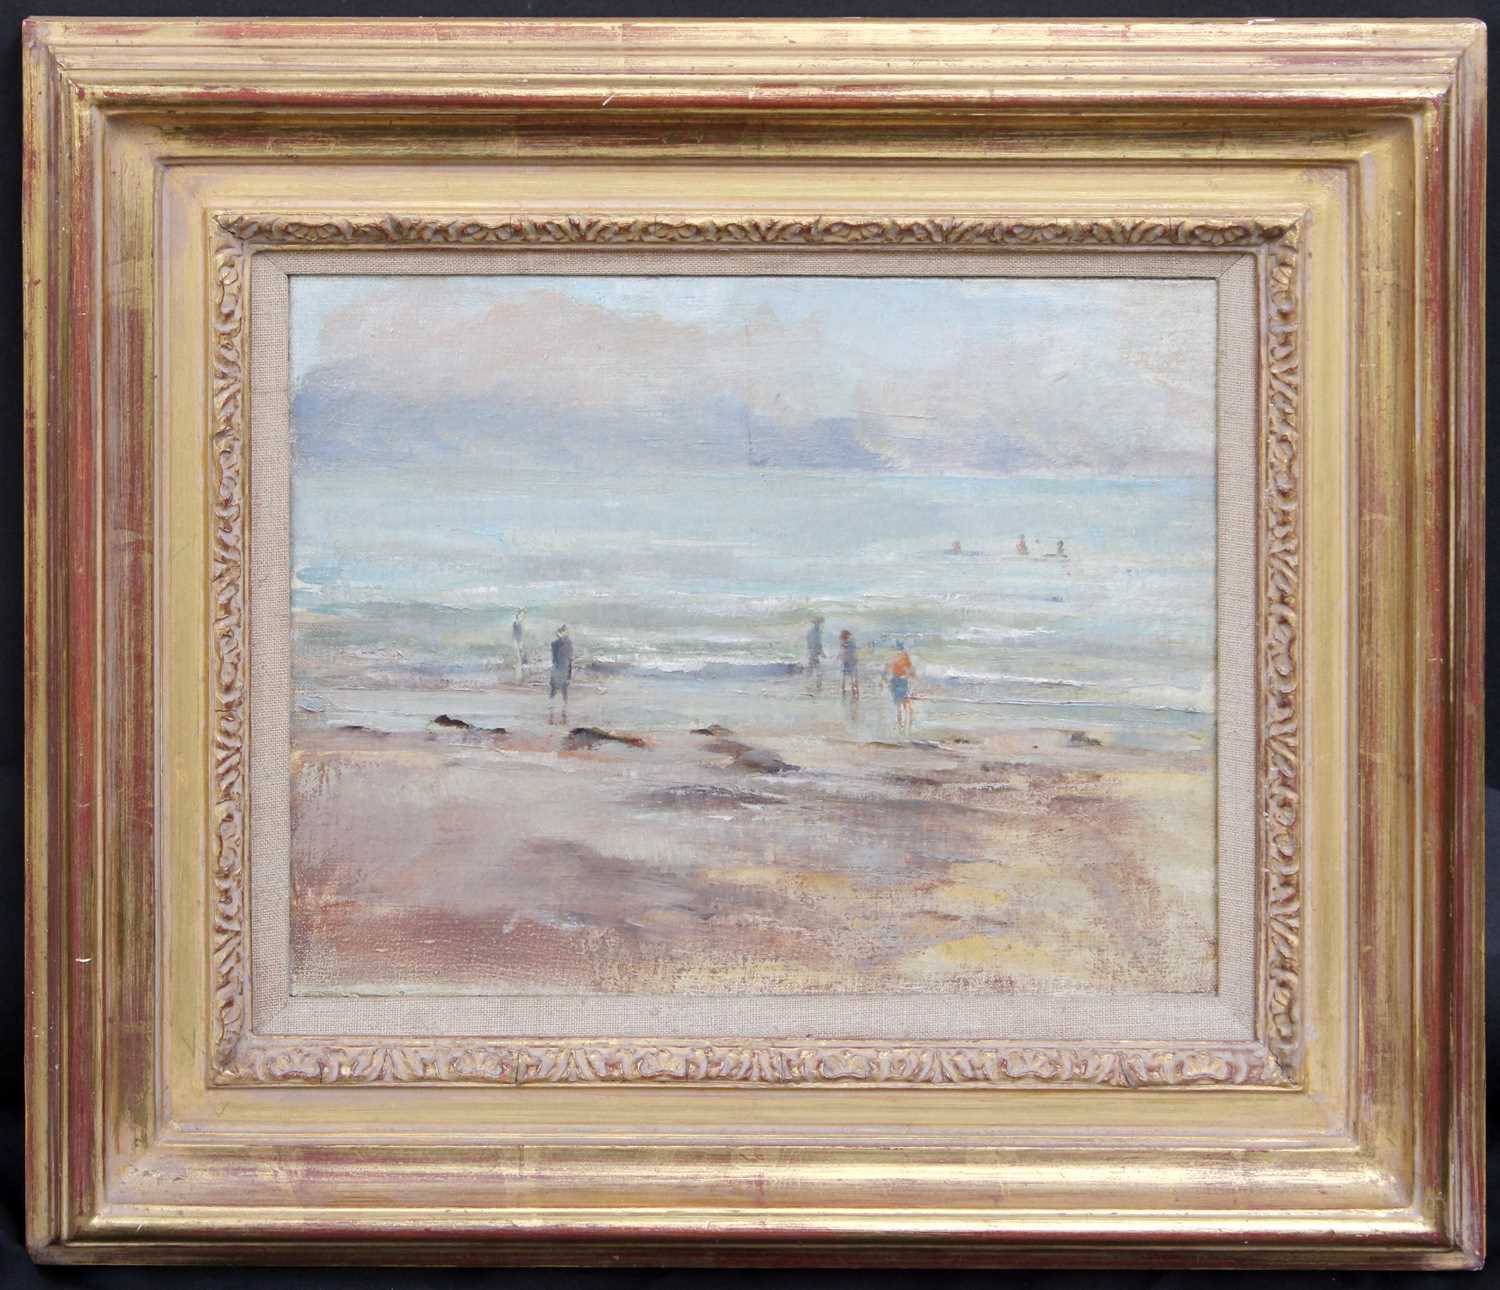 Follower of Philip Wilson Steer OM (1890-1942) La Plage Oil on canvas, 23cm by 40.5cm - Image 2 of 2